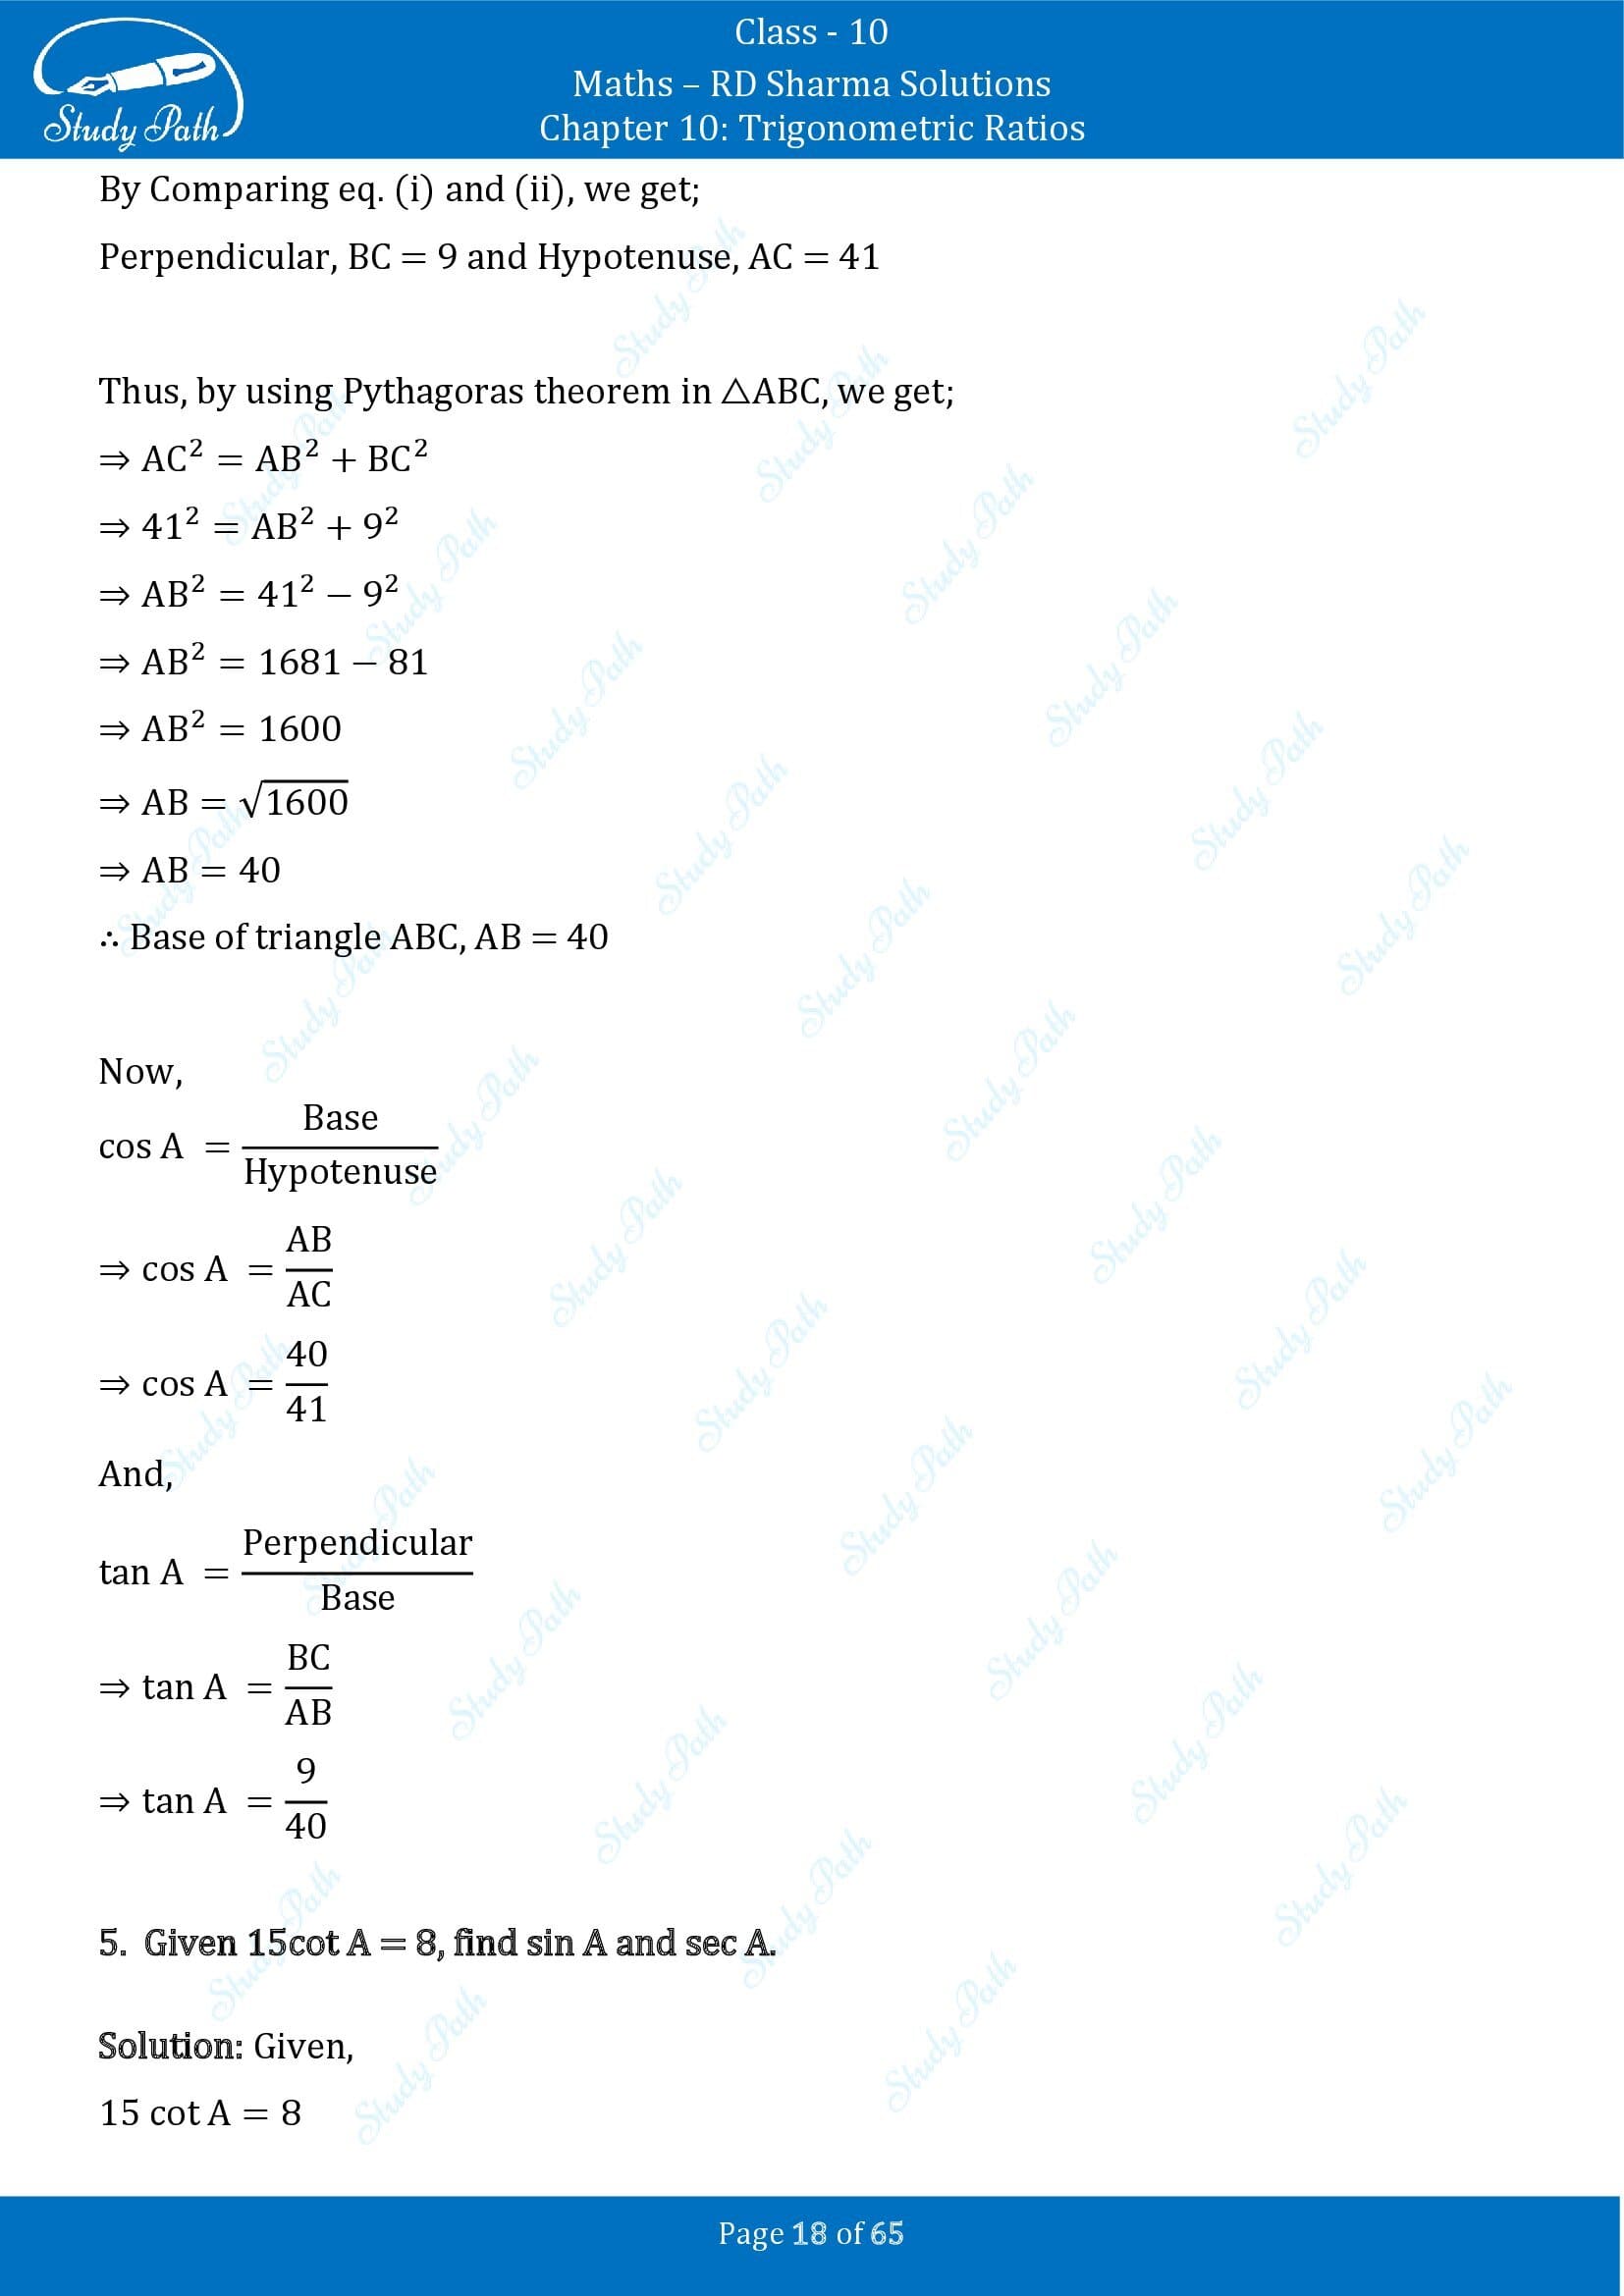 RD Sharma Solutions Class 10 Chapter 10 Trigonometric Ratios Exercise 10.1 00018